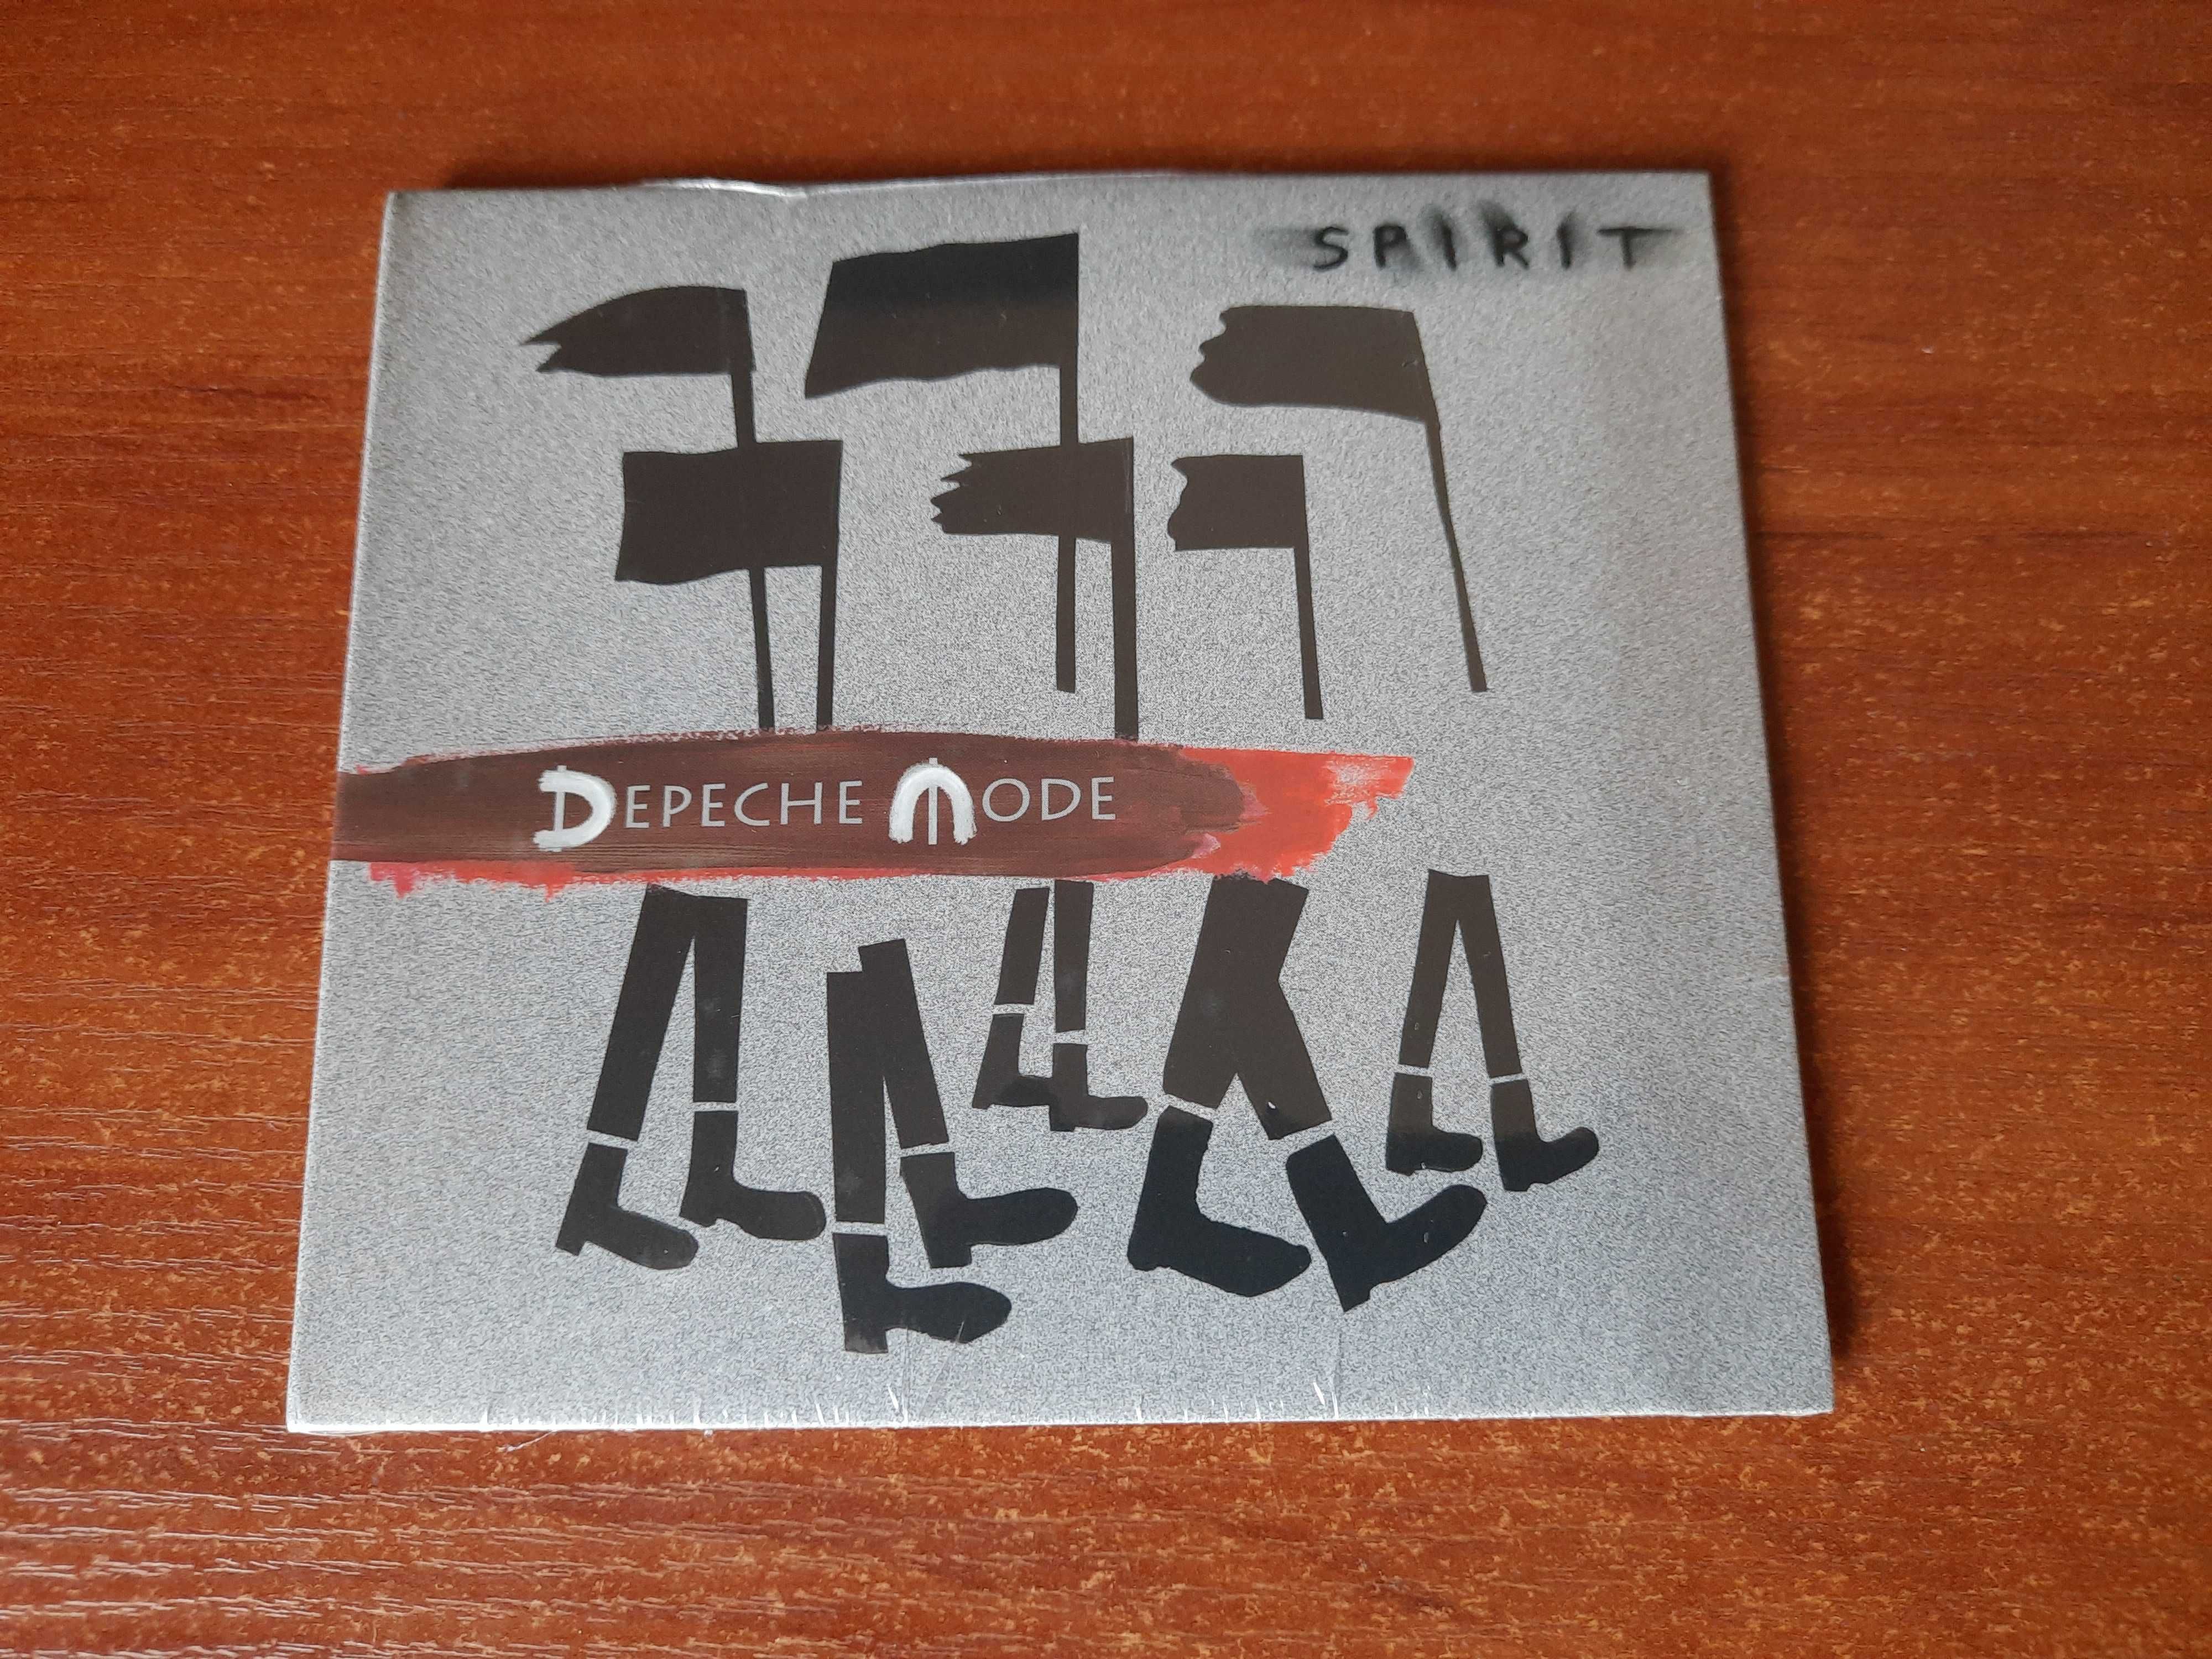 Audio CD Depeche mode - Spirit (SEALED)